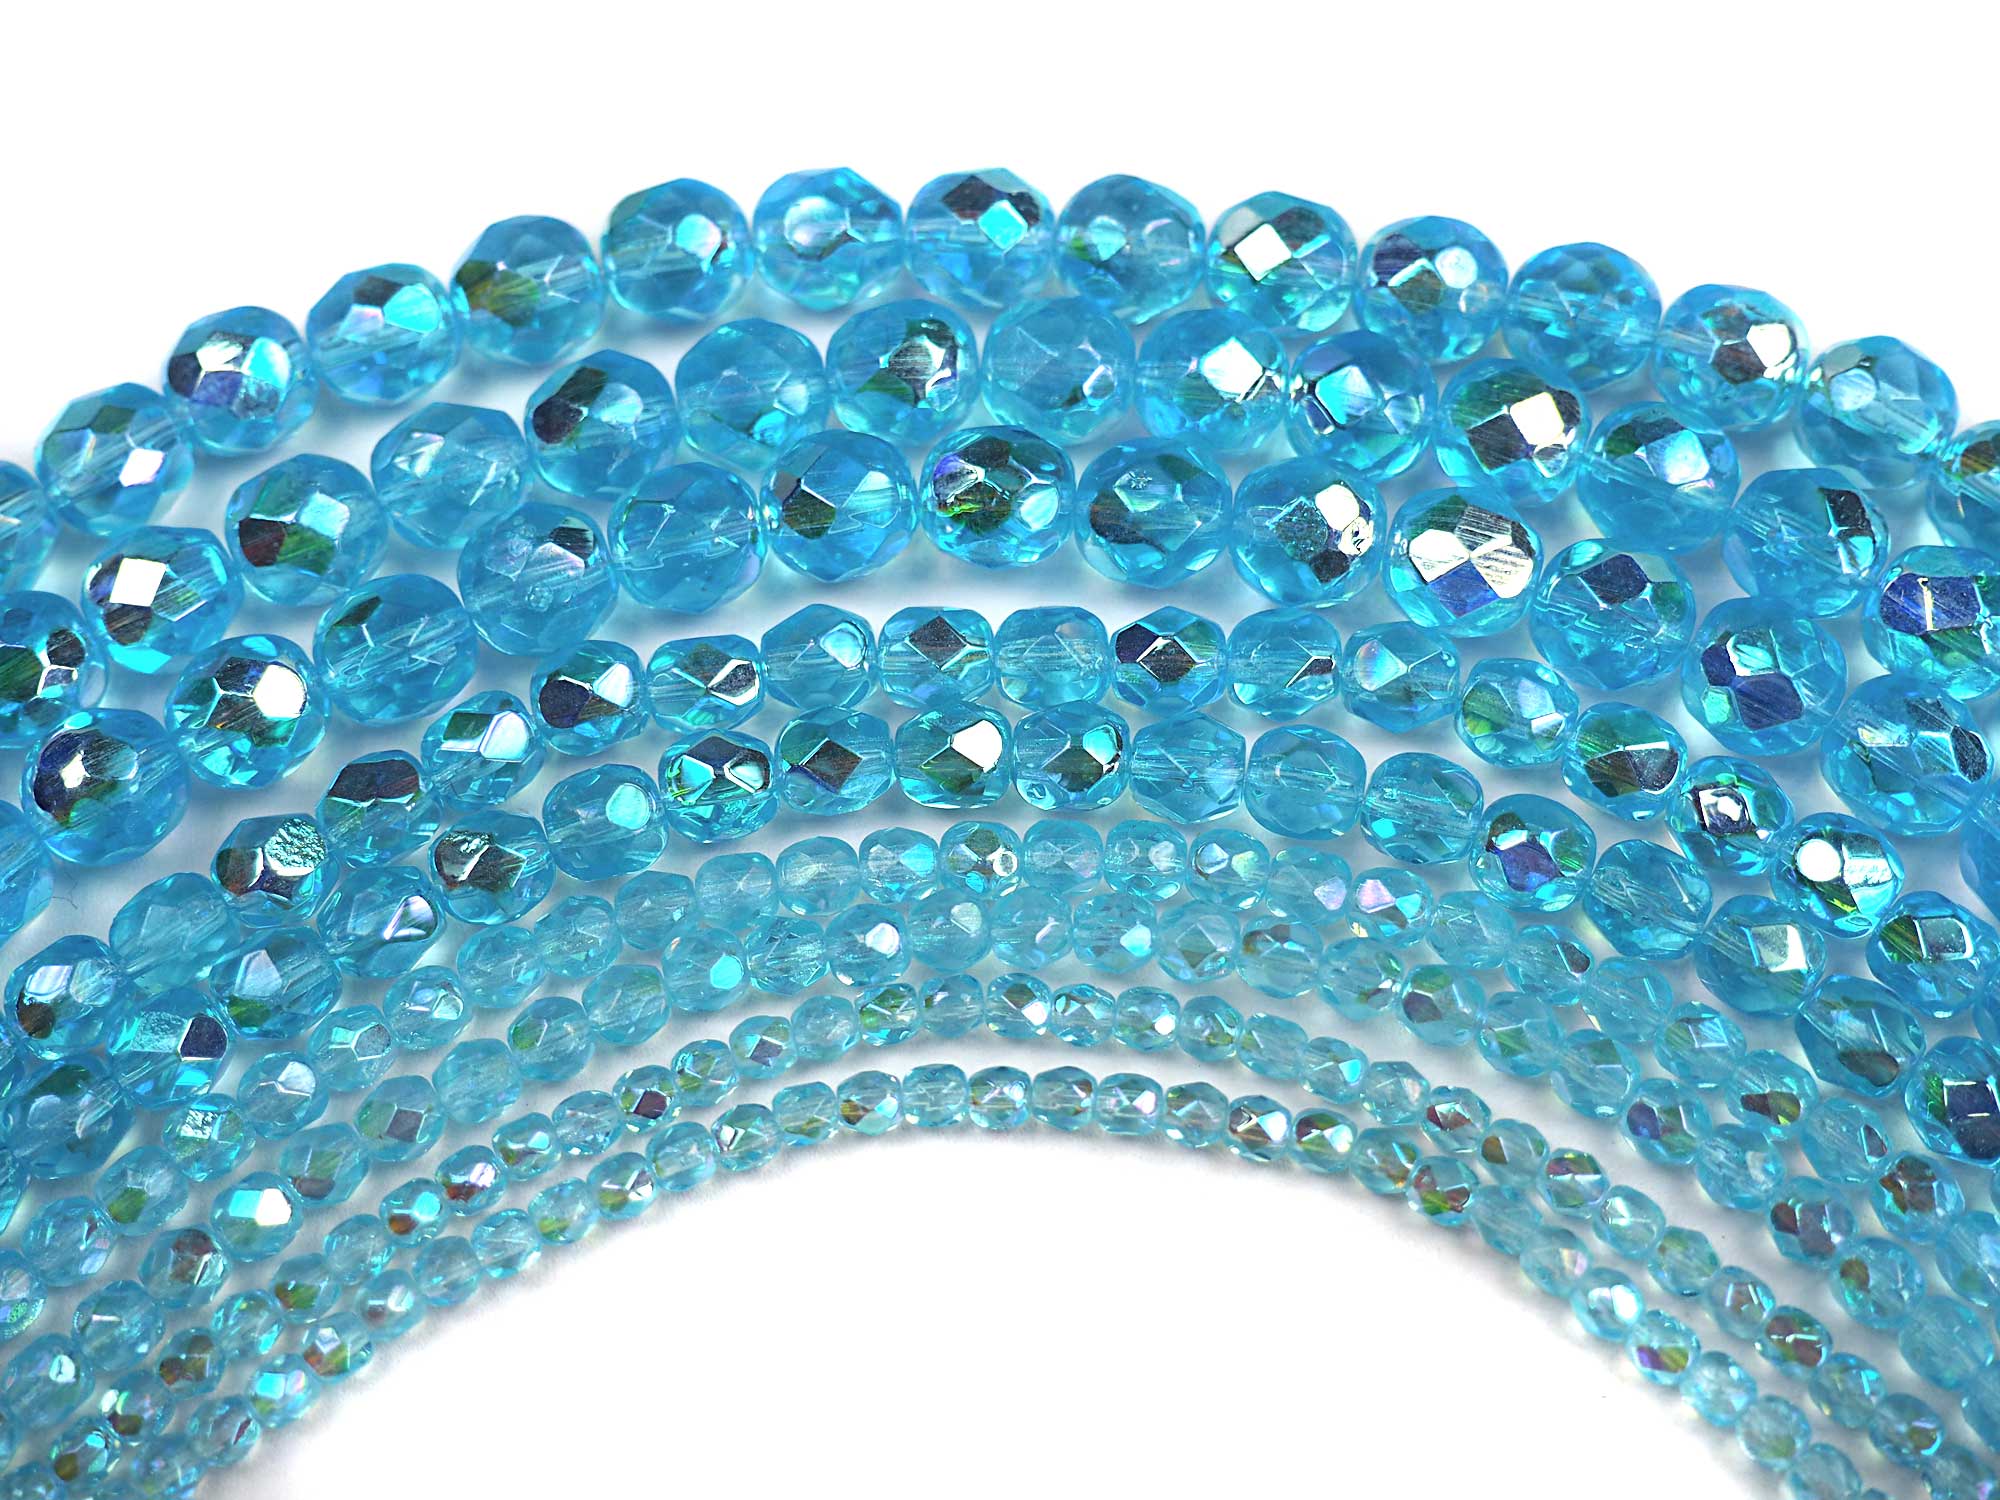 Aqua AB2X fully coated, Czech Fire Polished Round Faceted Glass Beads, 16 inch strand, Aquamarine double coated with Aurora Borealis